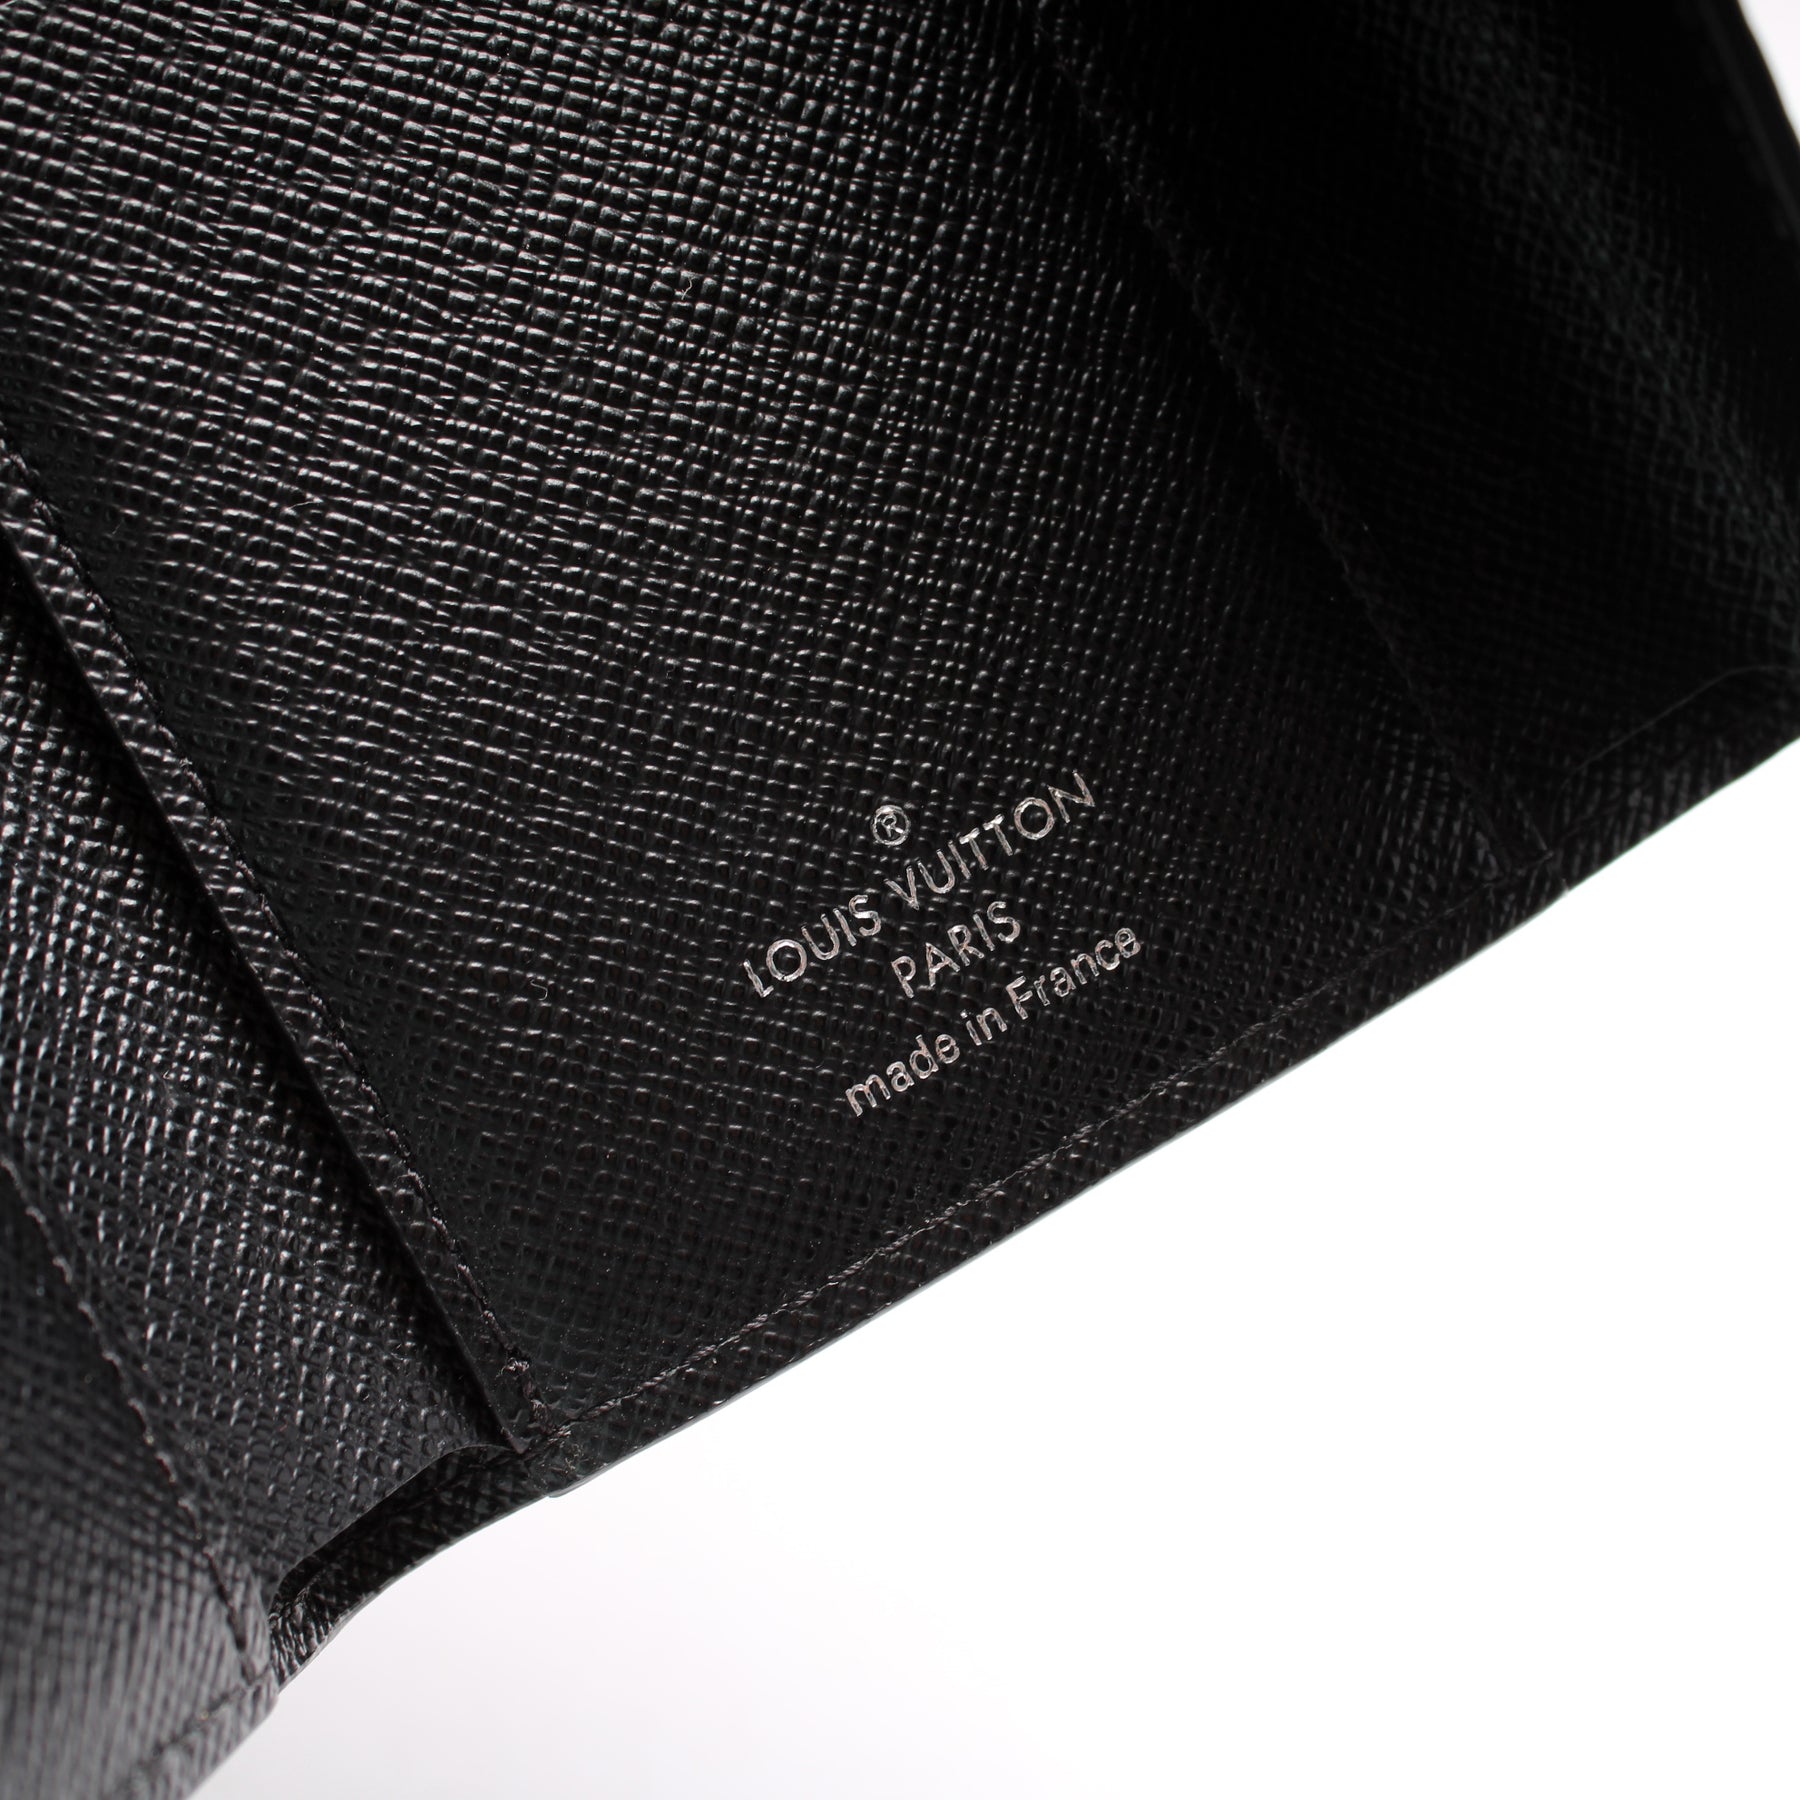 Victorine Wallet Epi – Keeks Designer Handbags